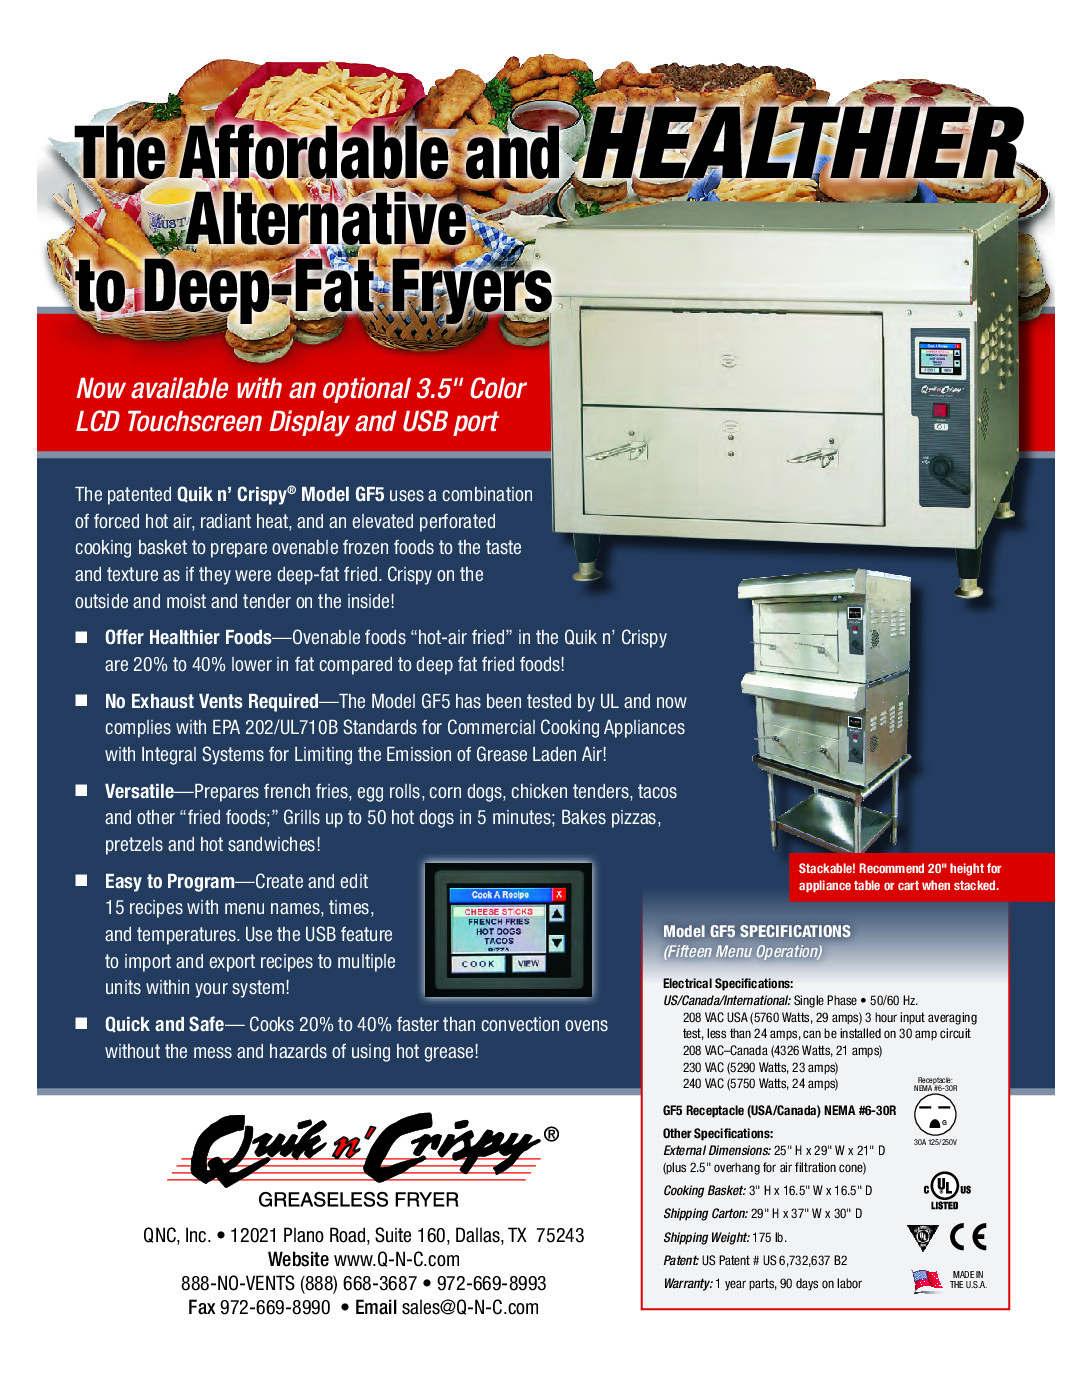 DoughXpress 900009 GF5 Countertop Greaseless Commercial Air Fryer w/ 5 lb., 24.0 Amps, 240v